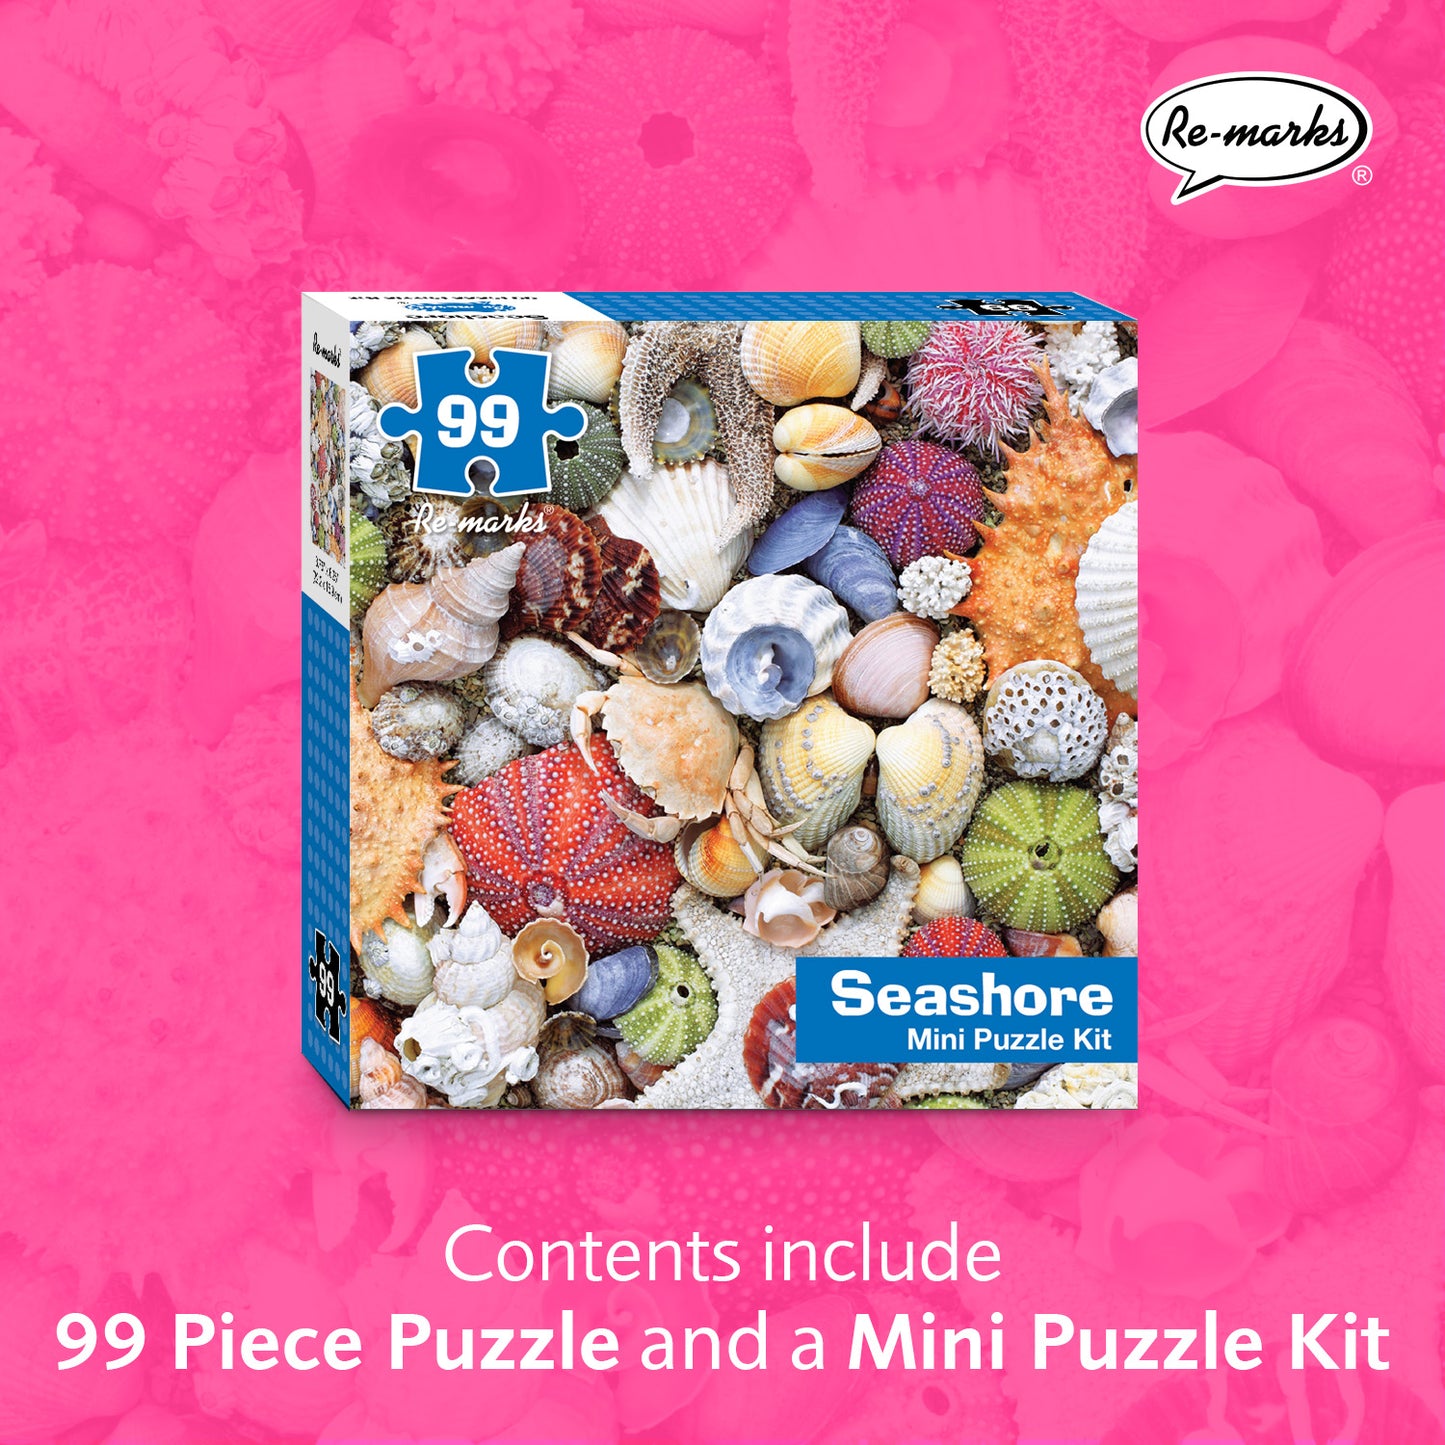 Seashore Mini Puzzle Kit - 99-Piece Puzzle with Display Kit